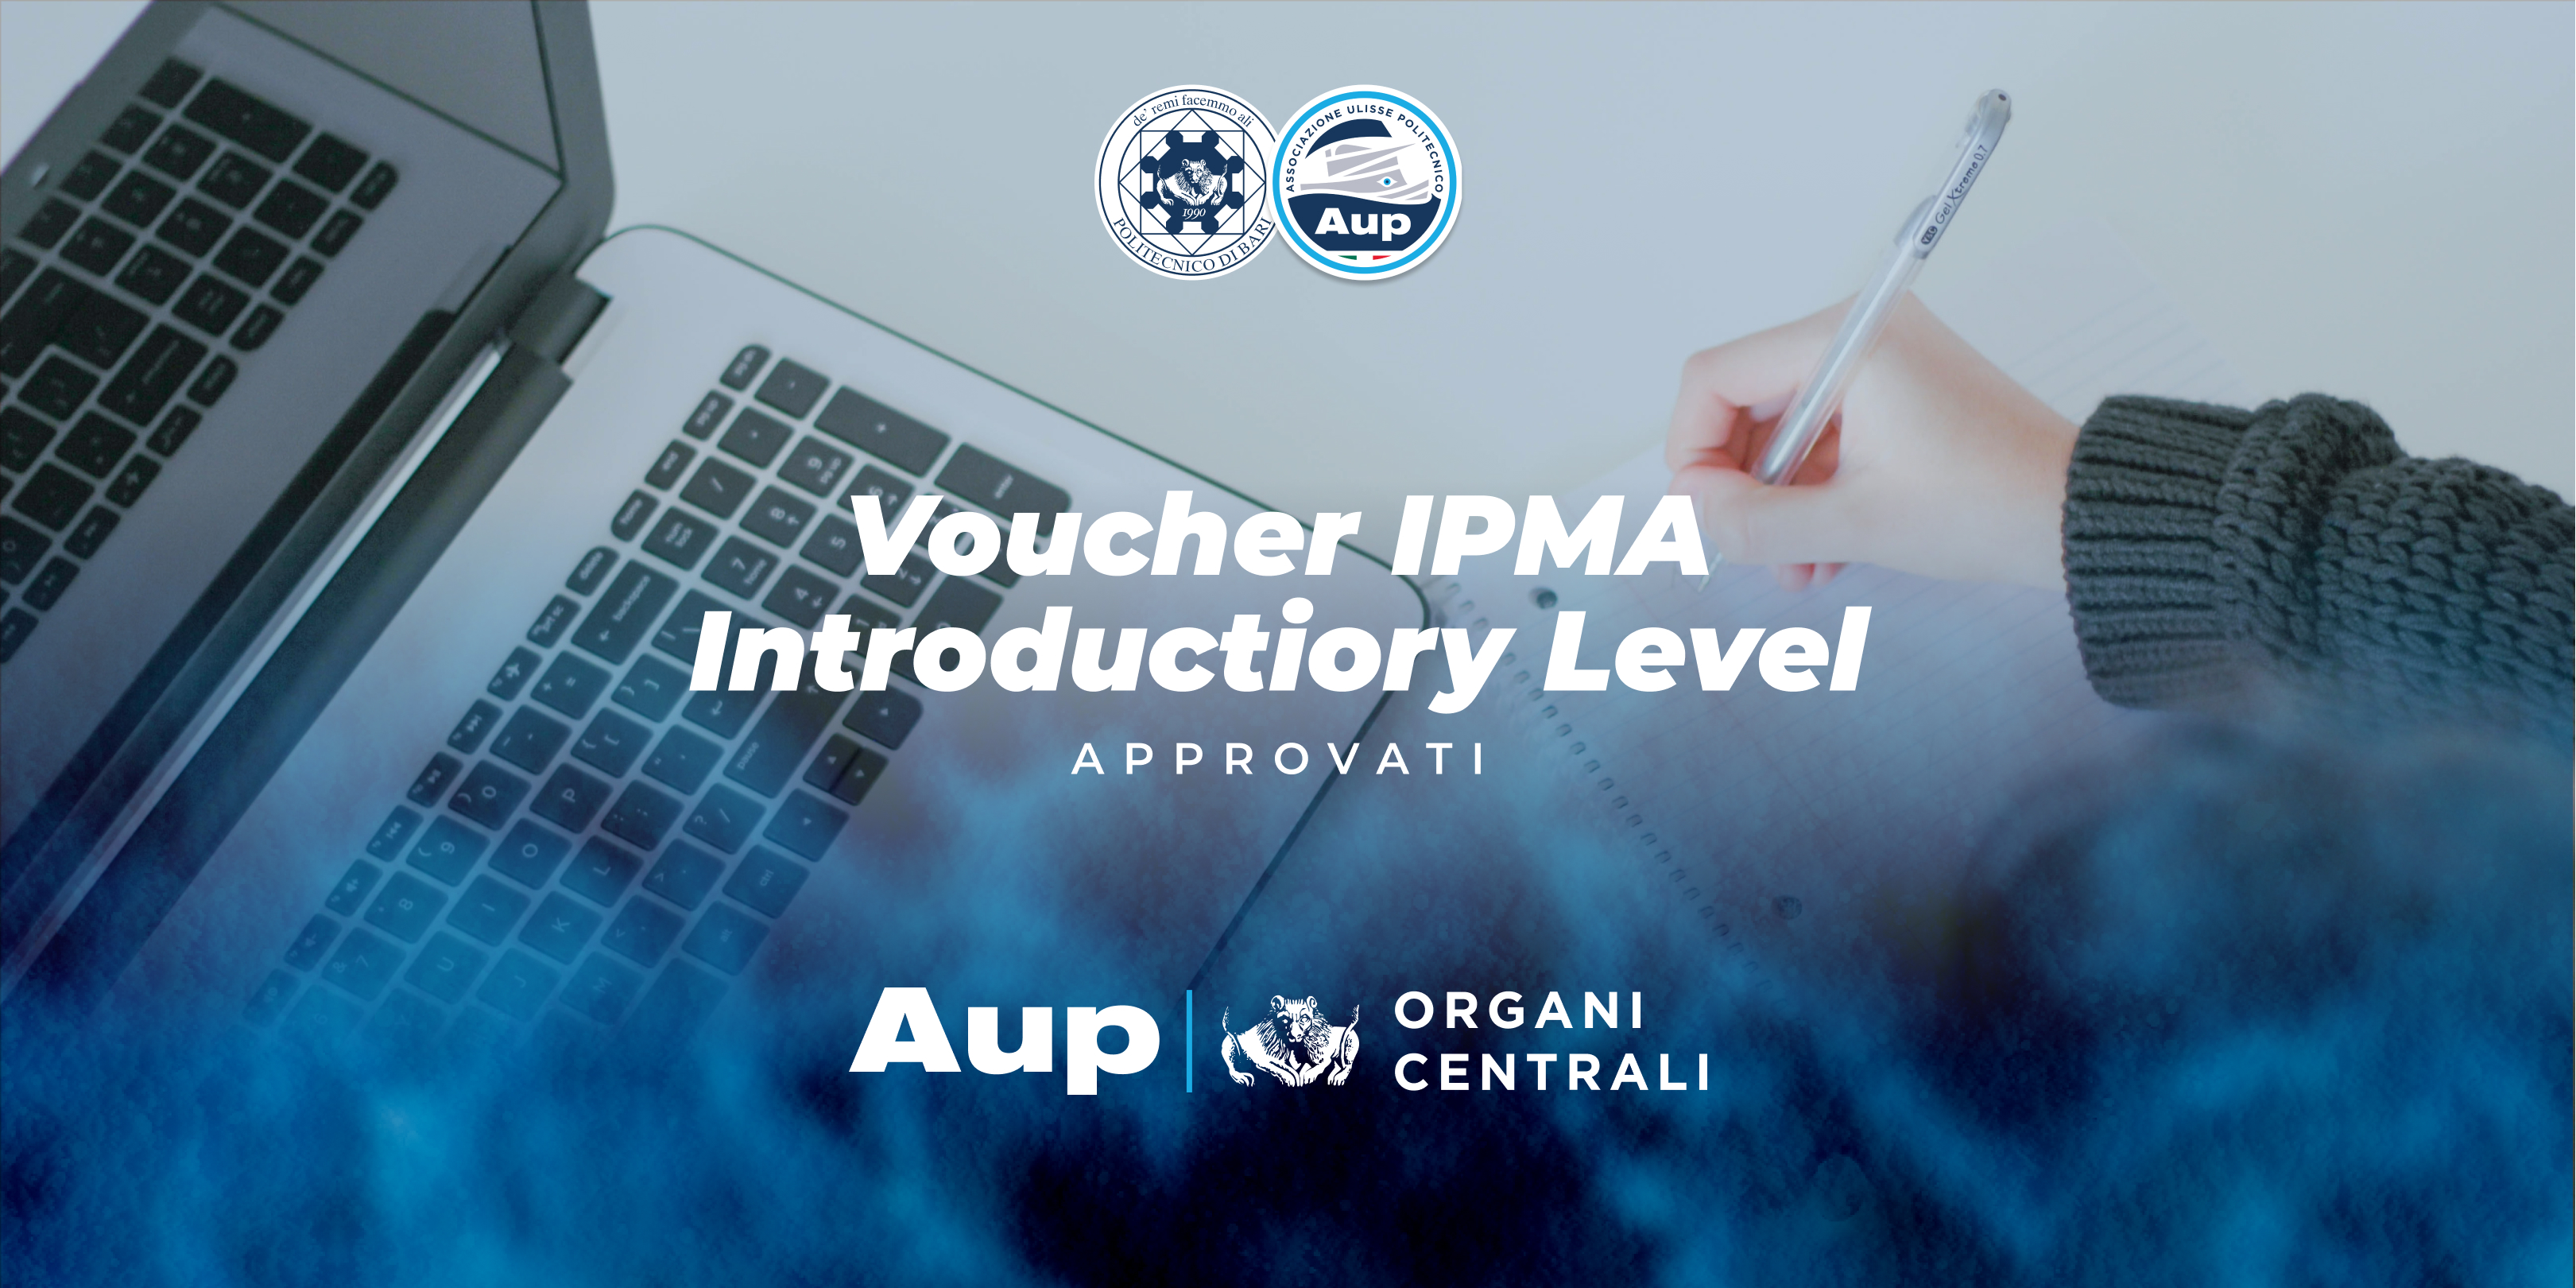 Voucher IPMA Introductiory Level - Approvati!